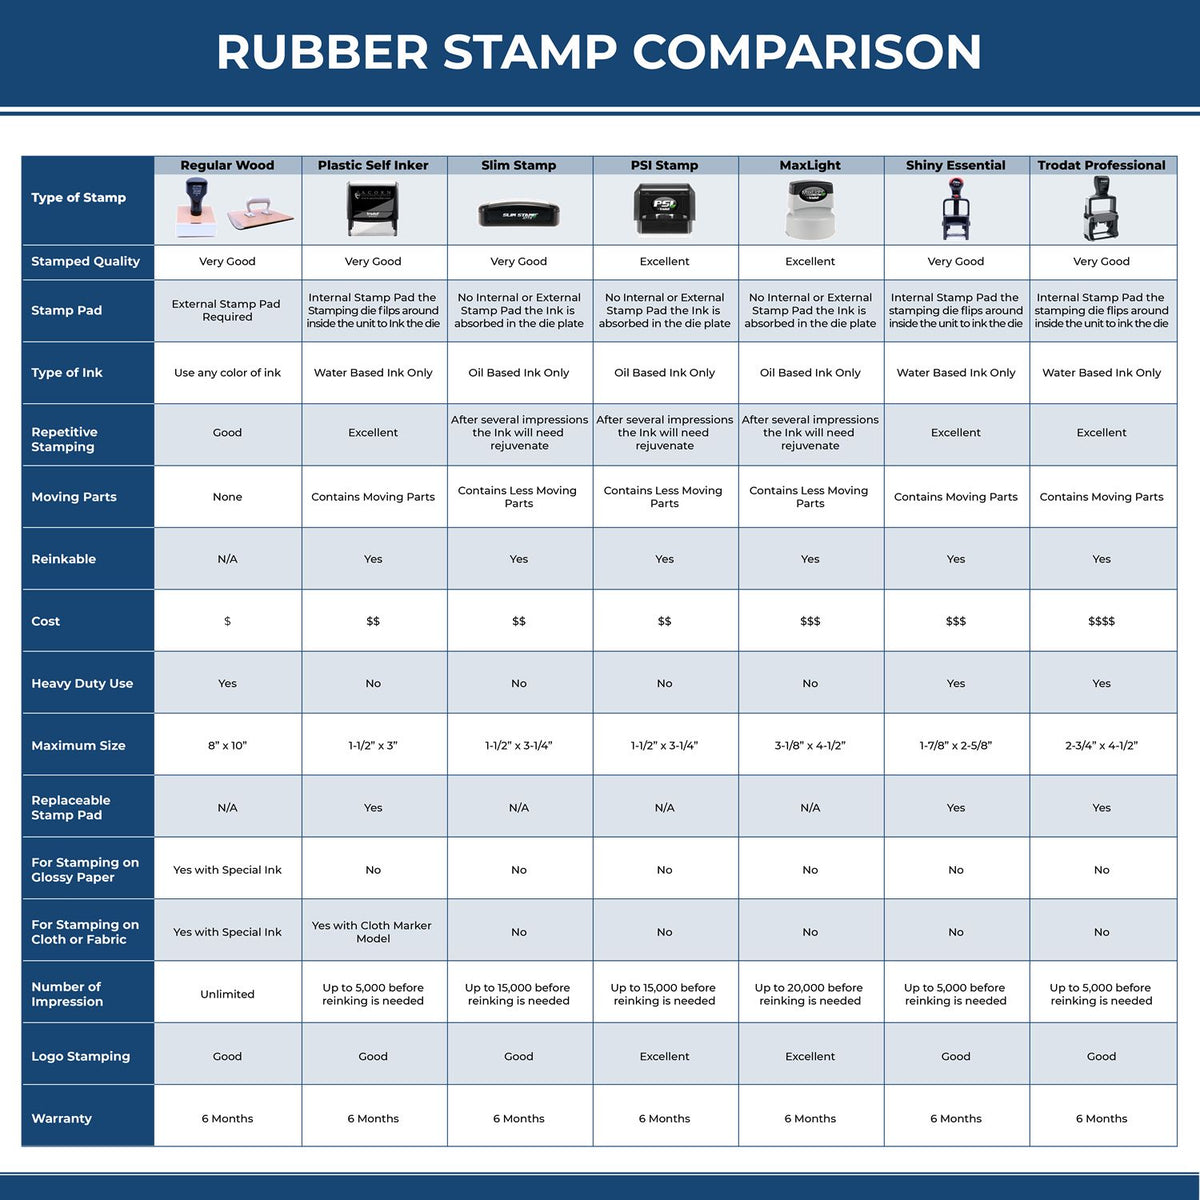 Large Non-Smoker Rubber Stamp 4987R Rubber Stamp Comparison